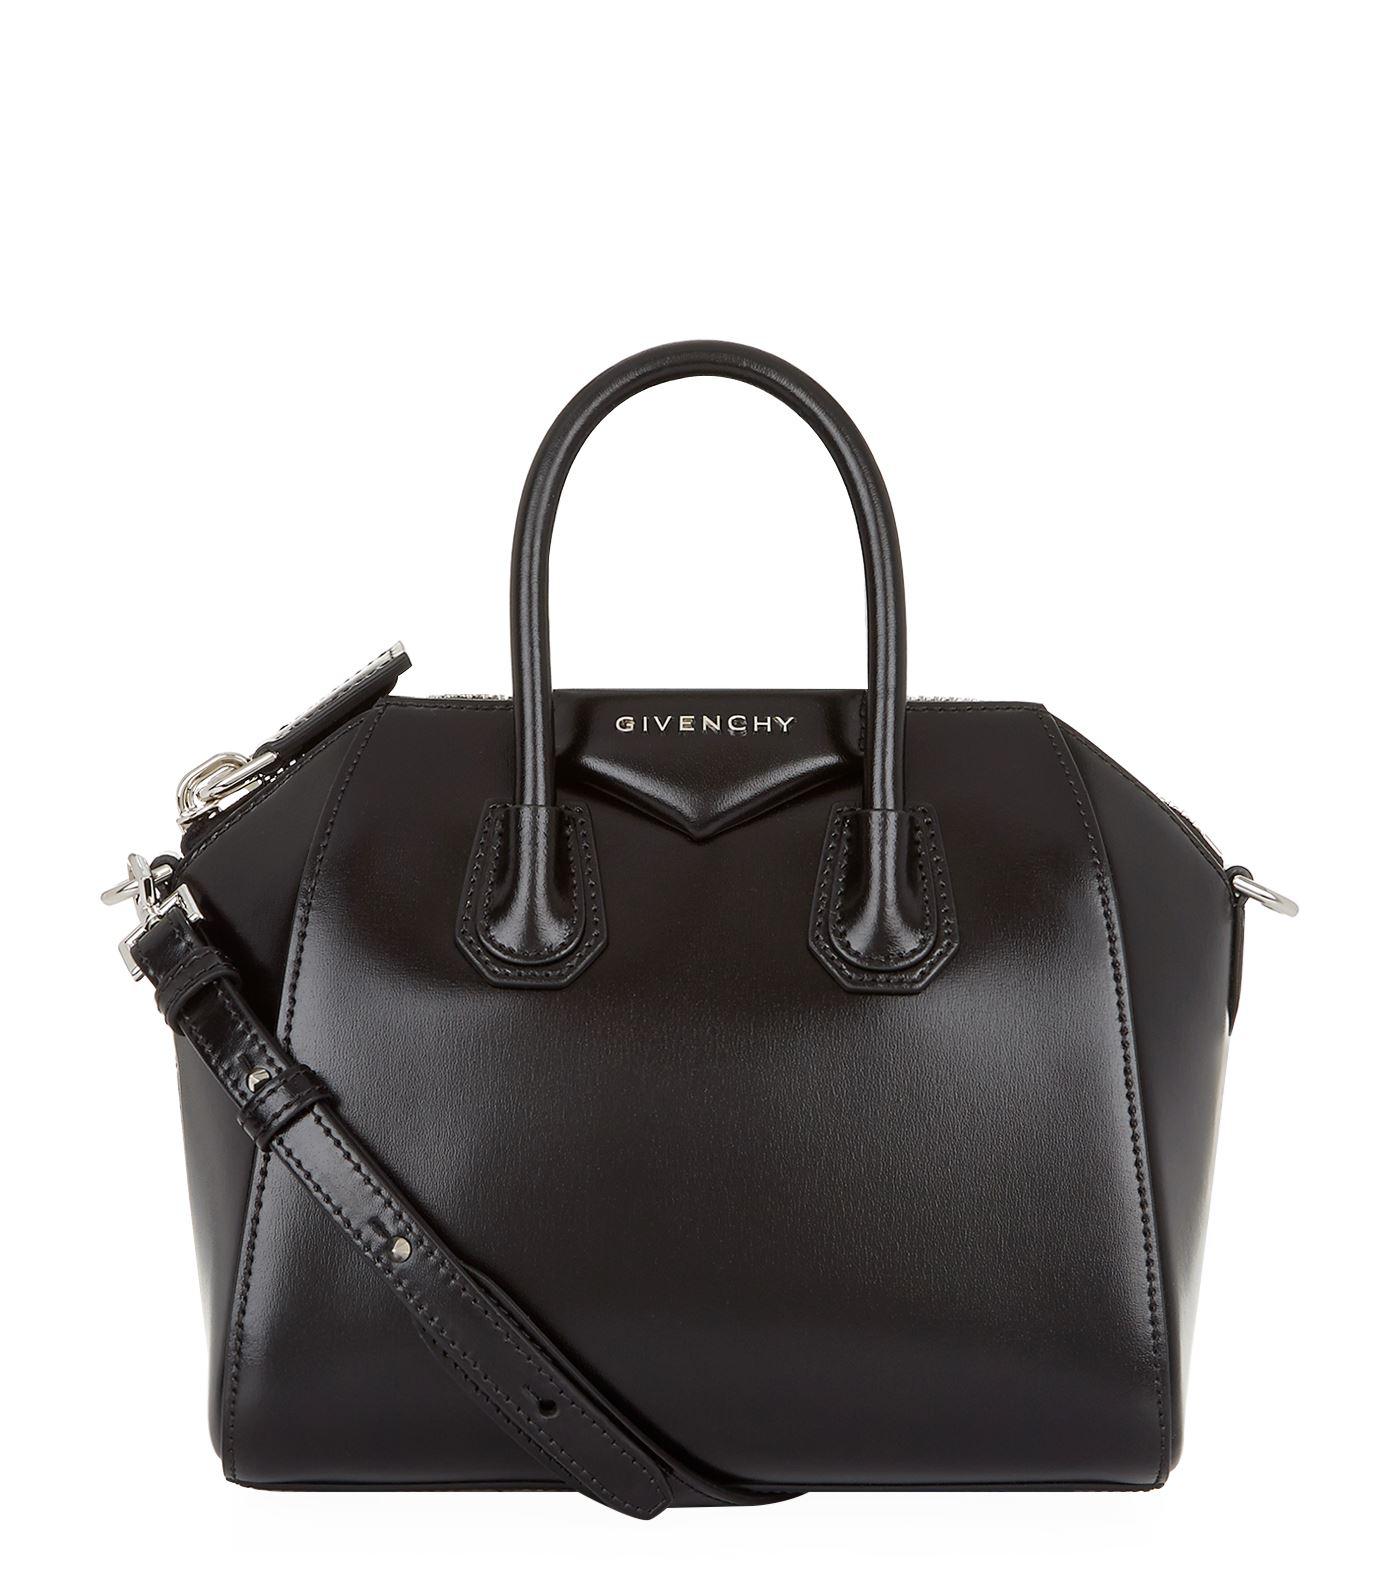 Lyst - Givenchy Mini Smooth Antigona Tote in Black - Save 1. ...